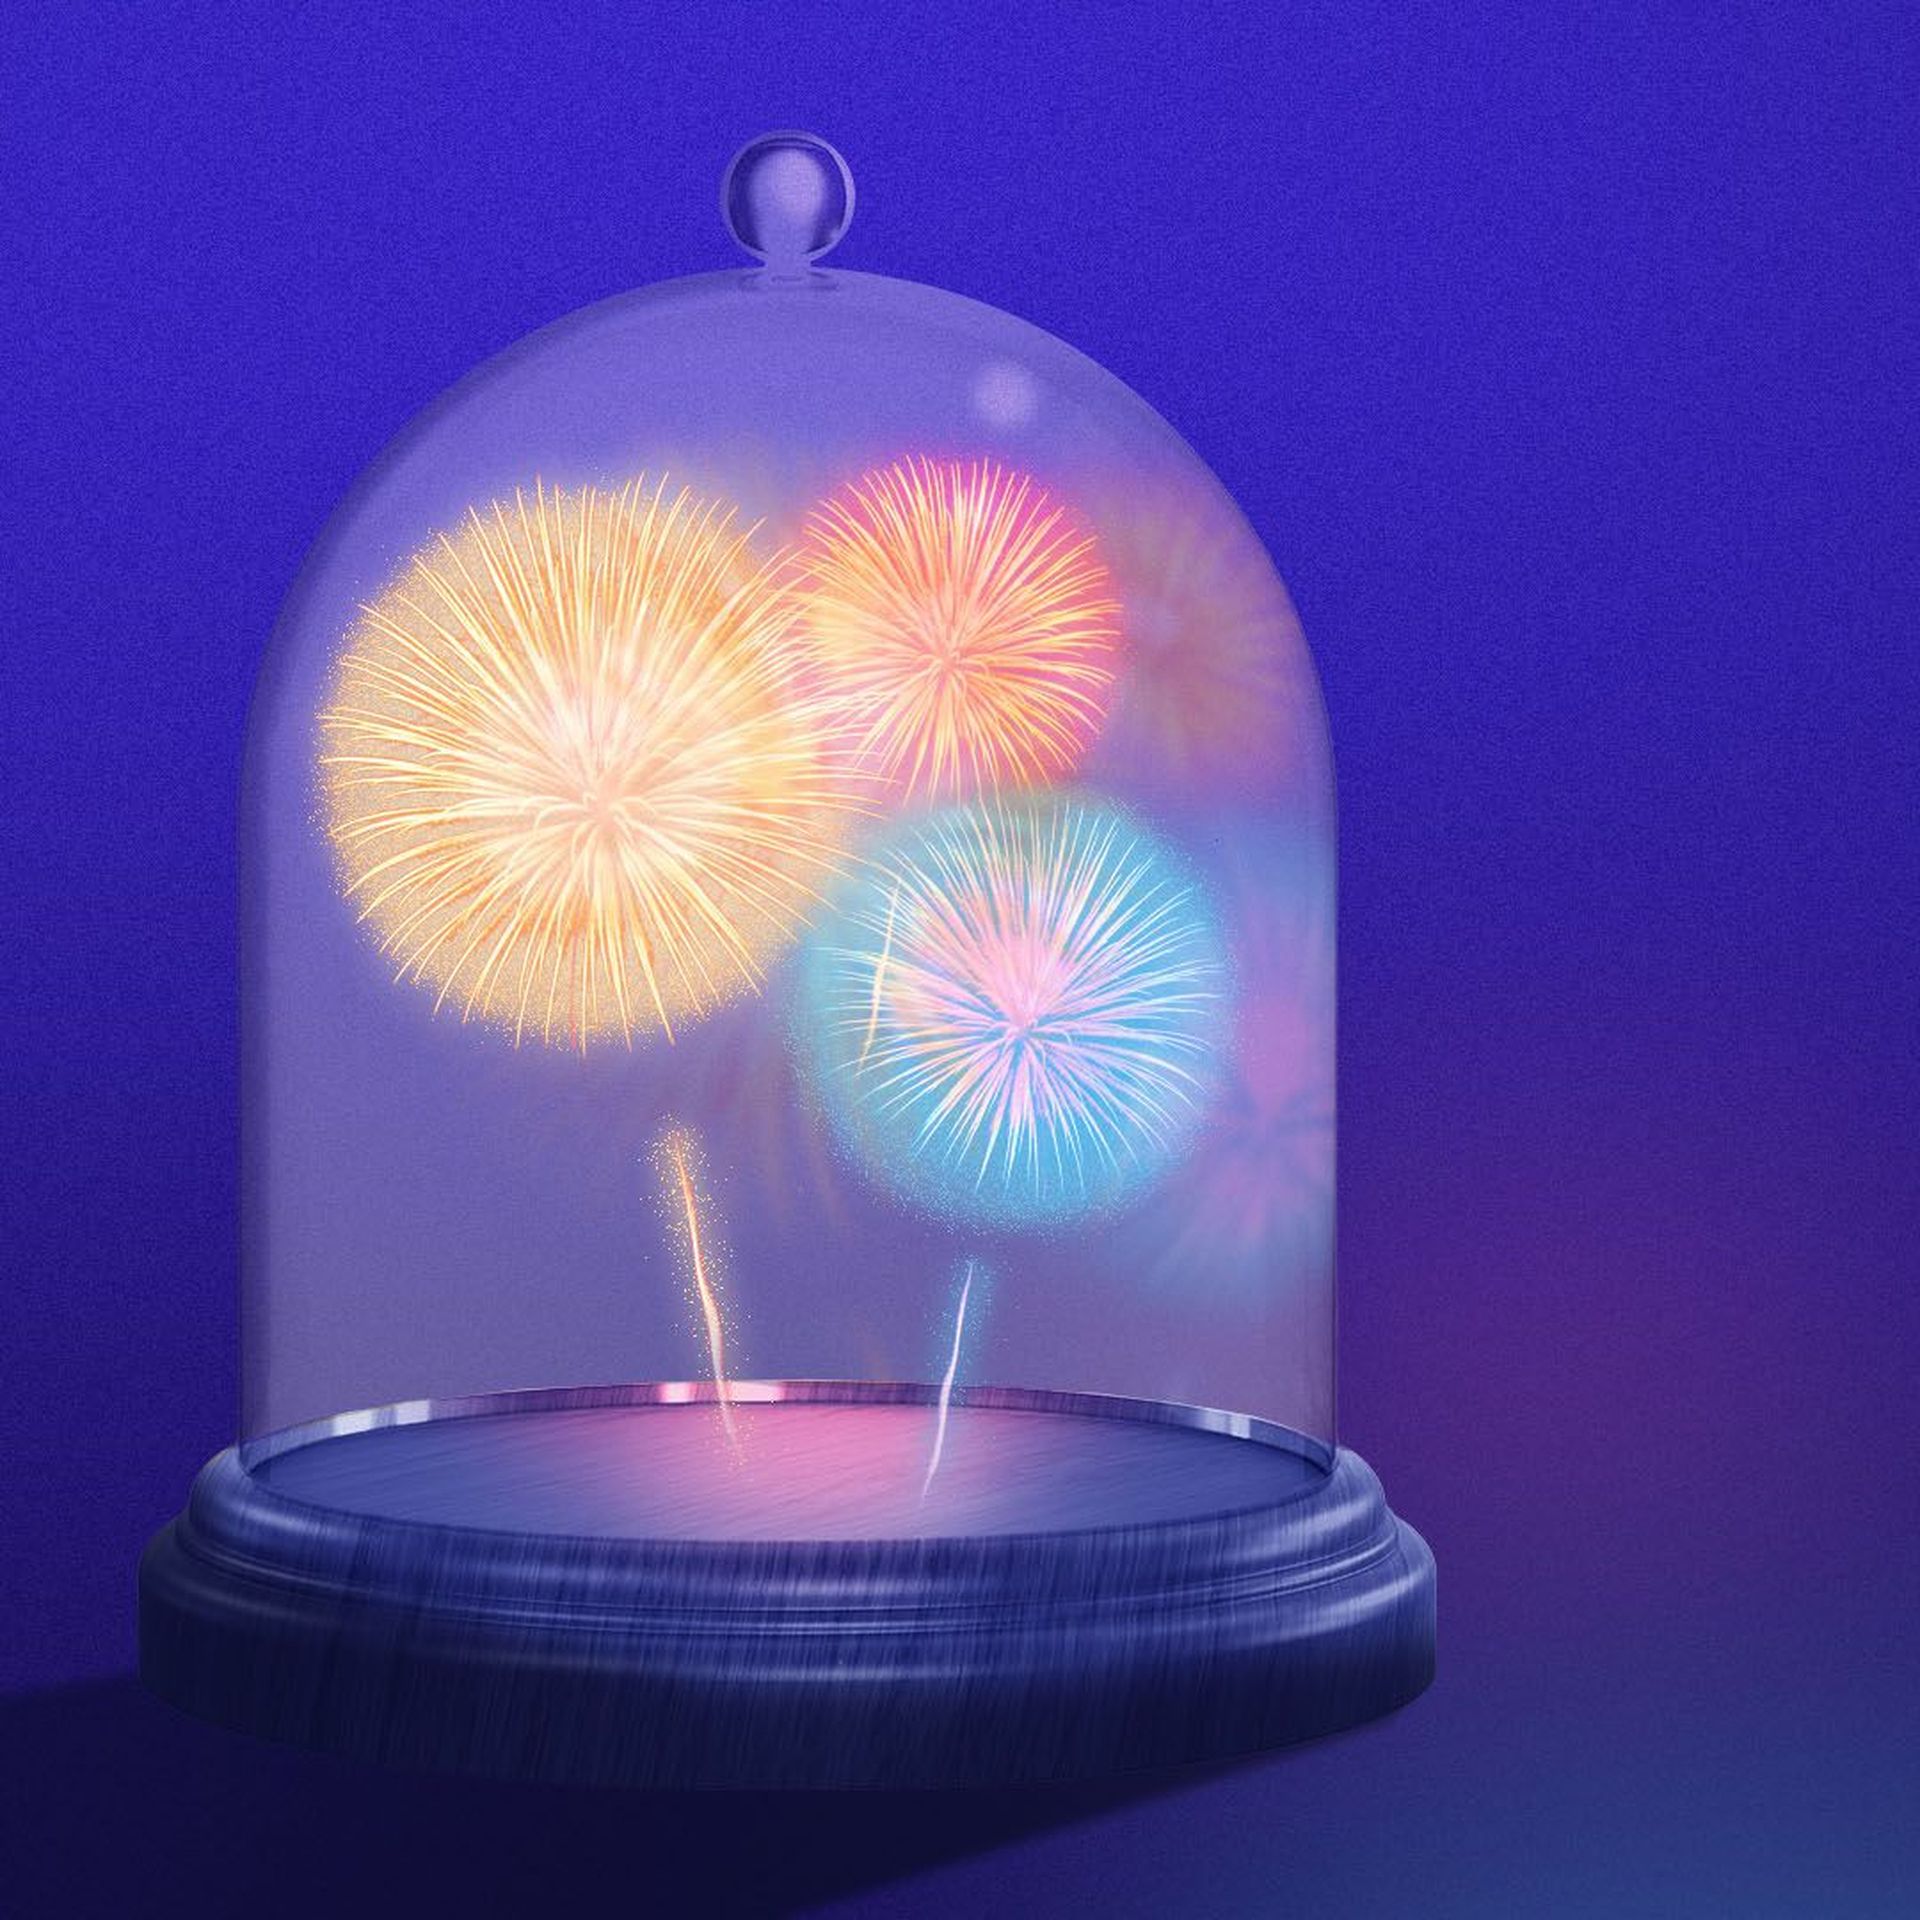 Illustration of a fireworks display under a glass bell jar